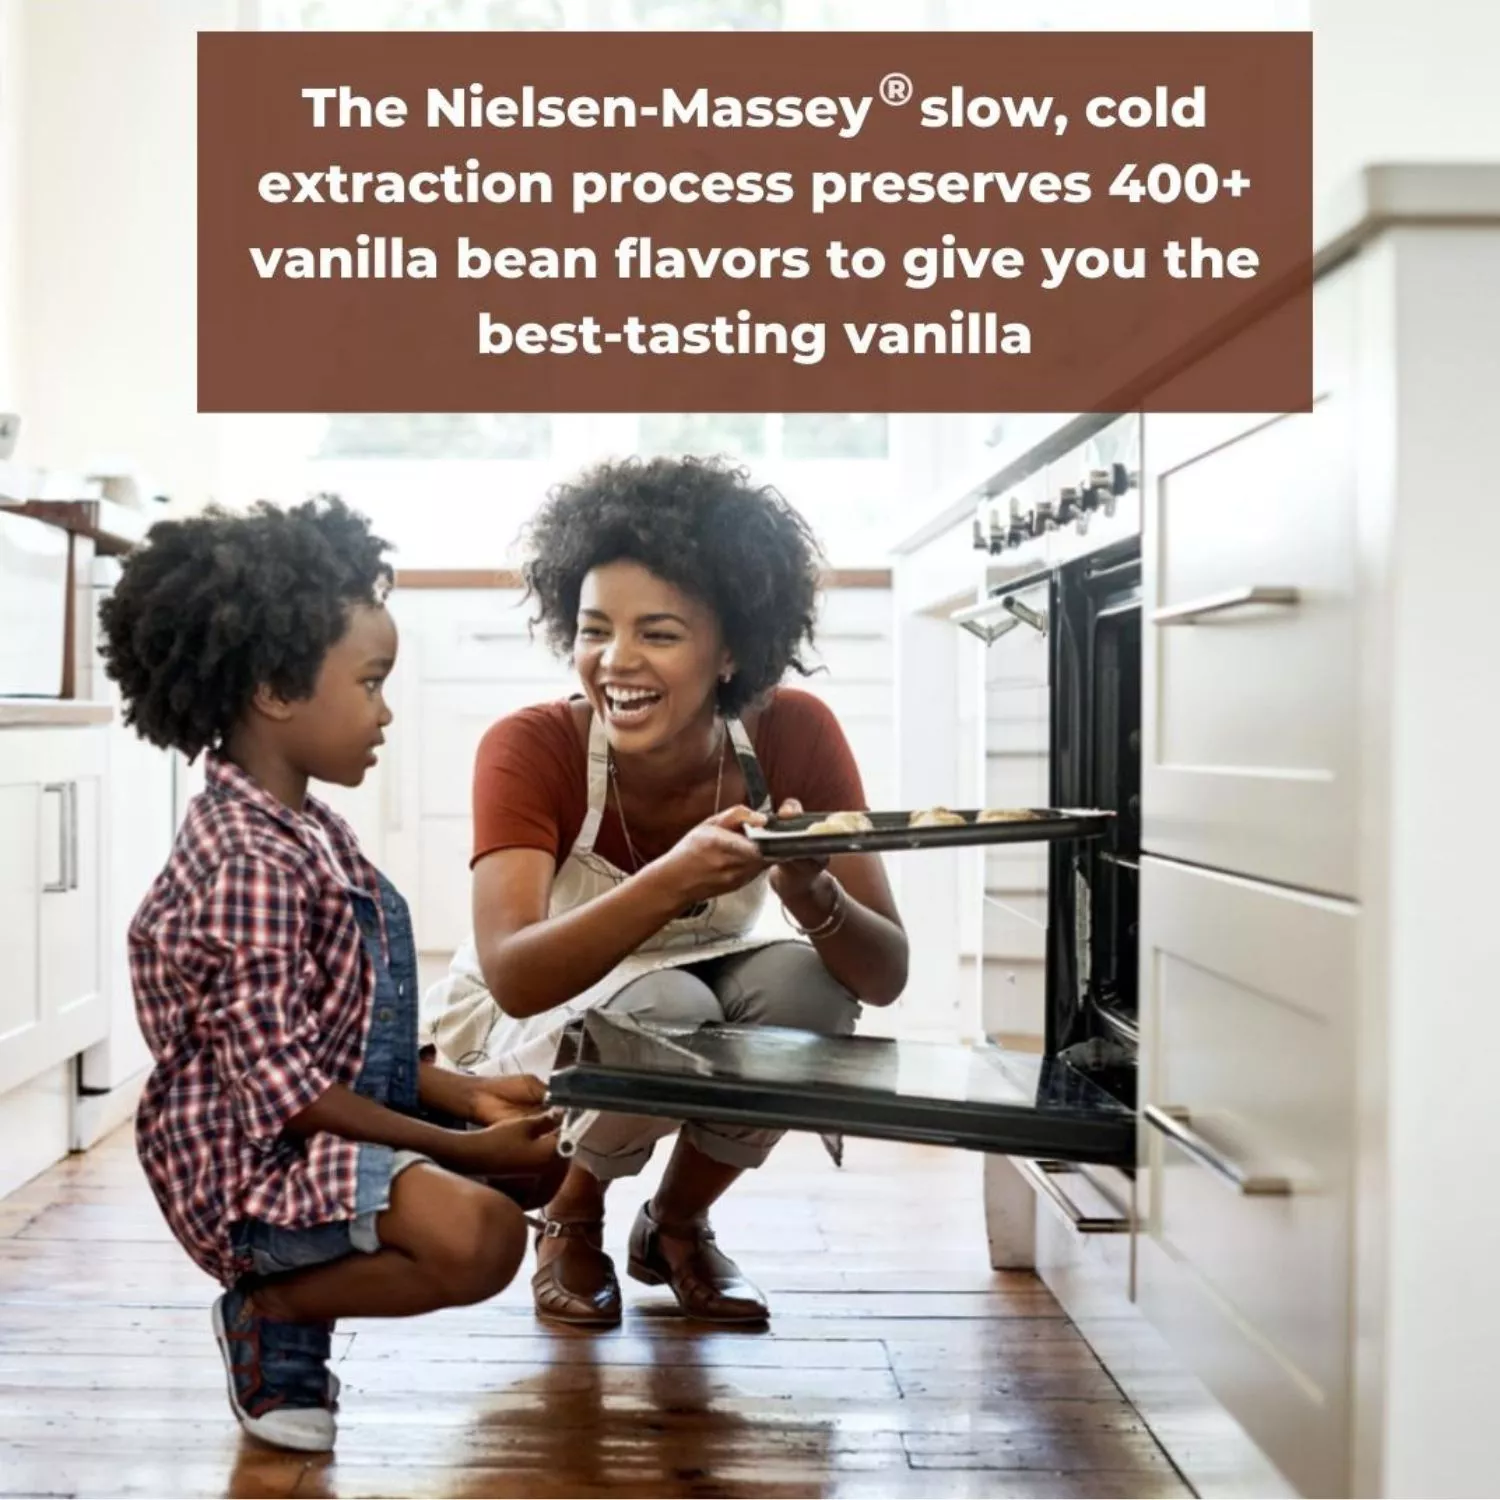 Nielsen-Massey Ugandan Pure Vanilla Extract, 4 oz.